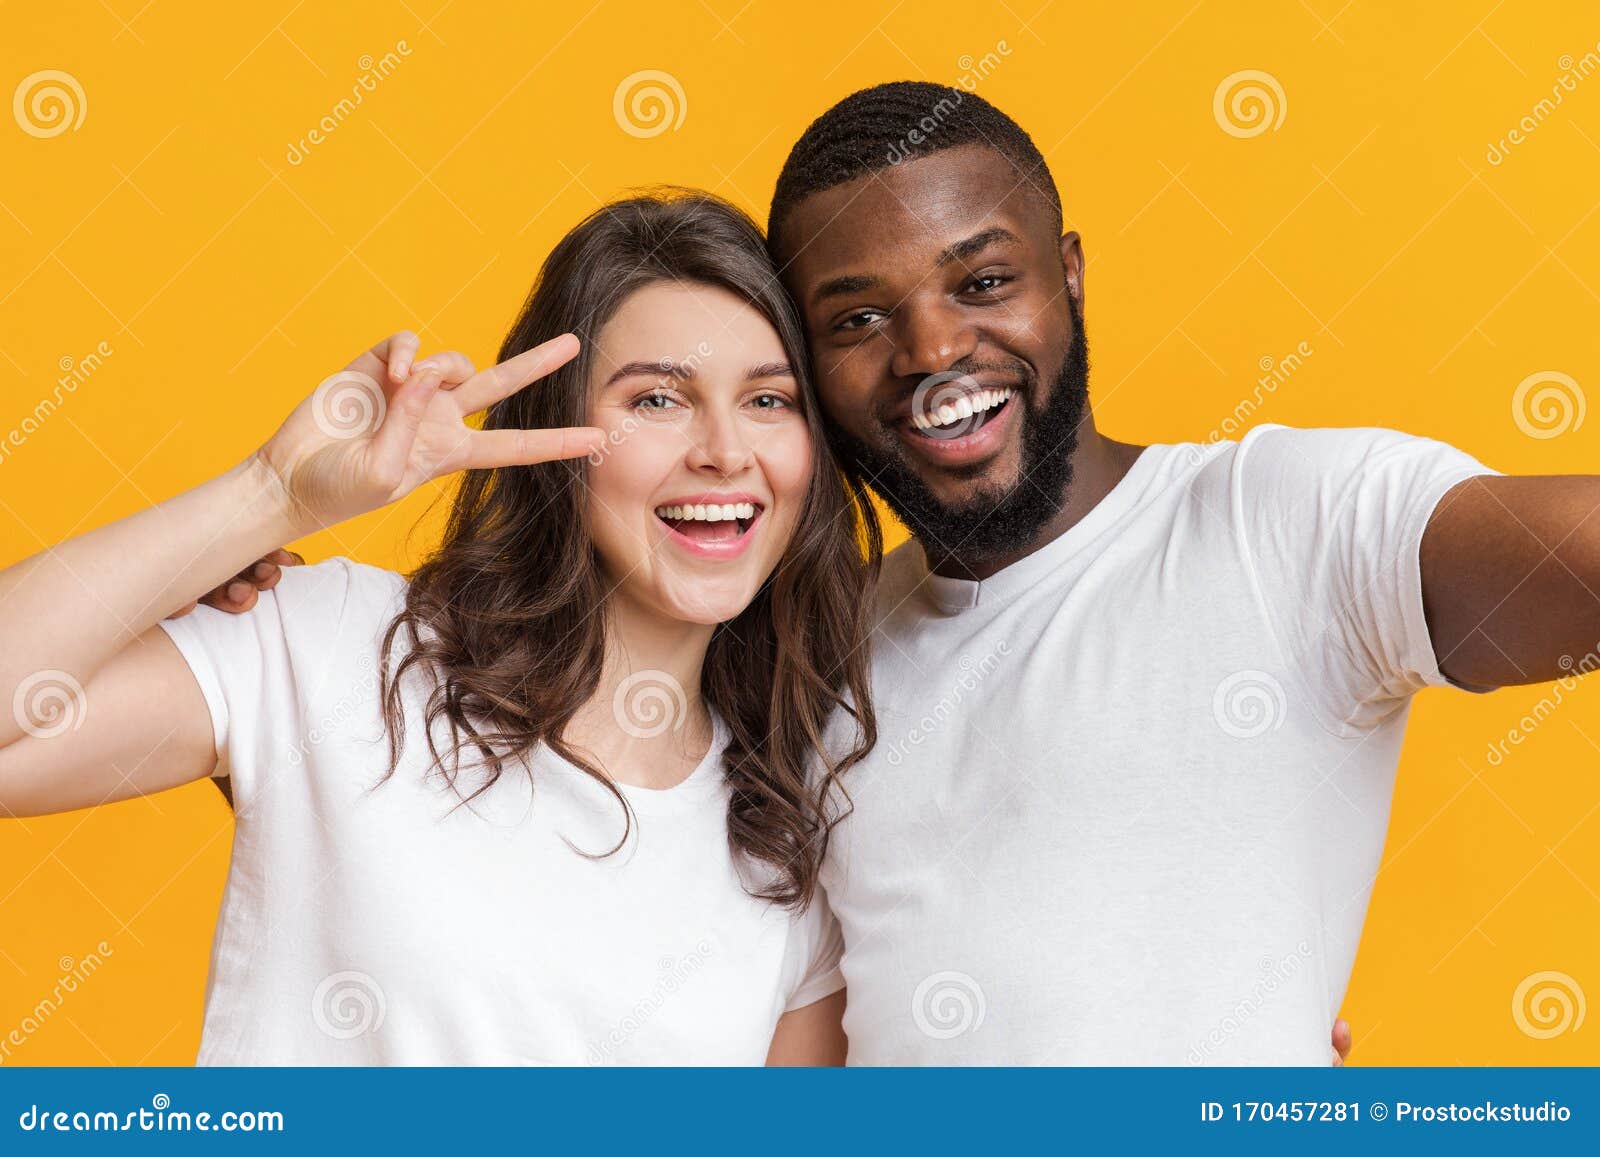 Black guy and girl